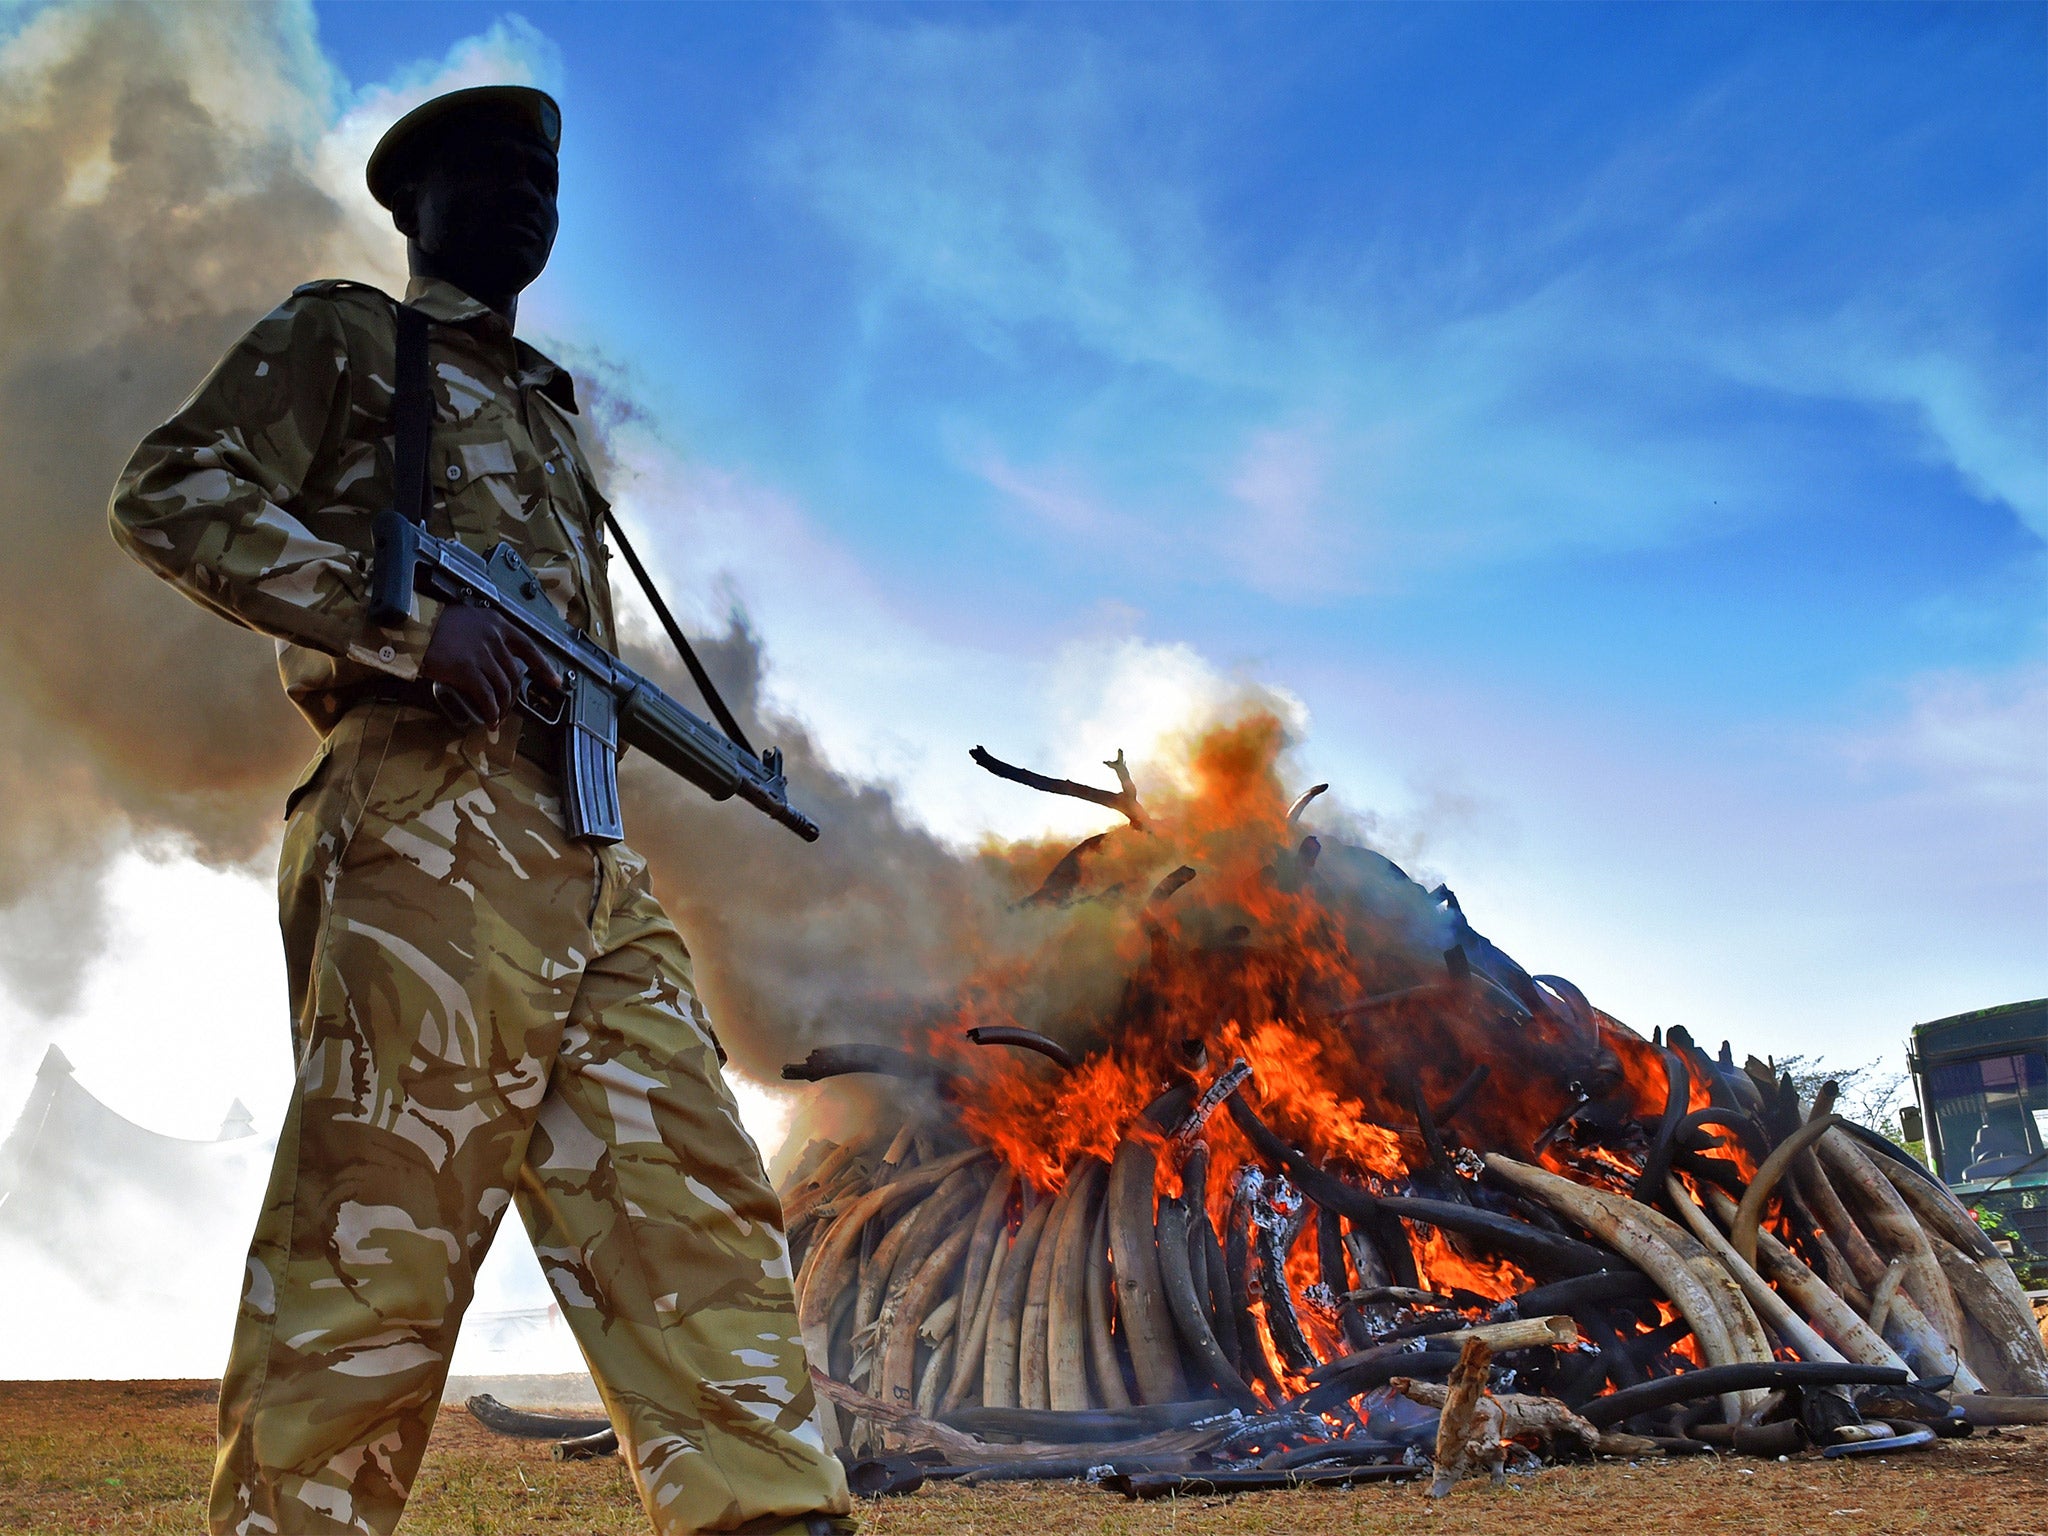 A Kenyan wildlife officer burns 15 tons of seized ivory